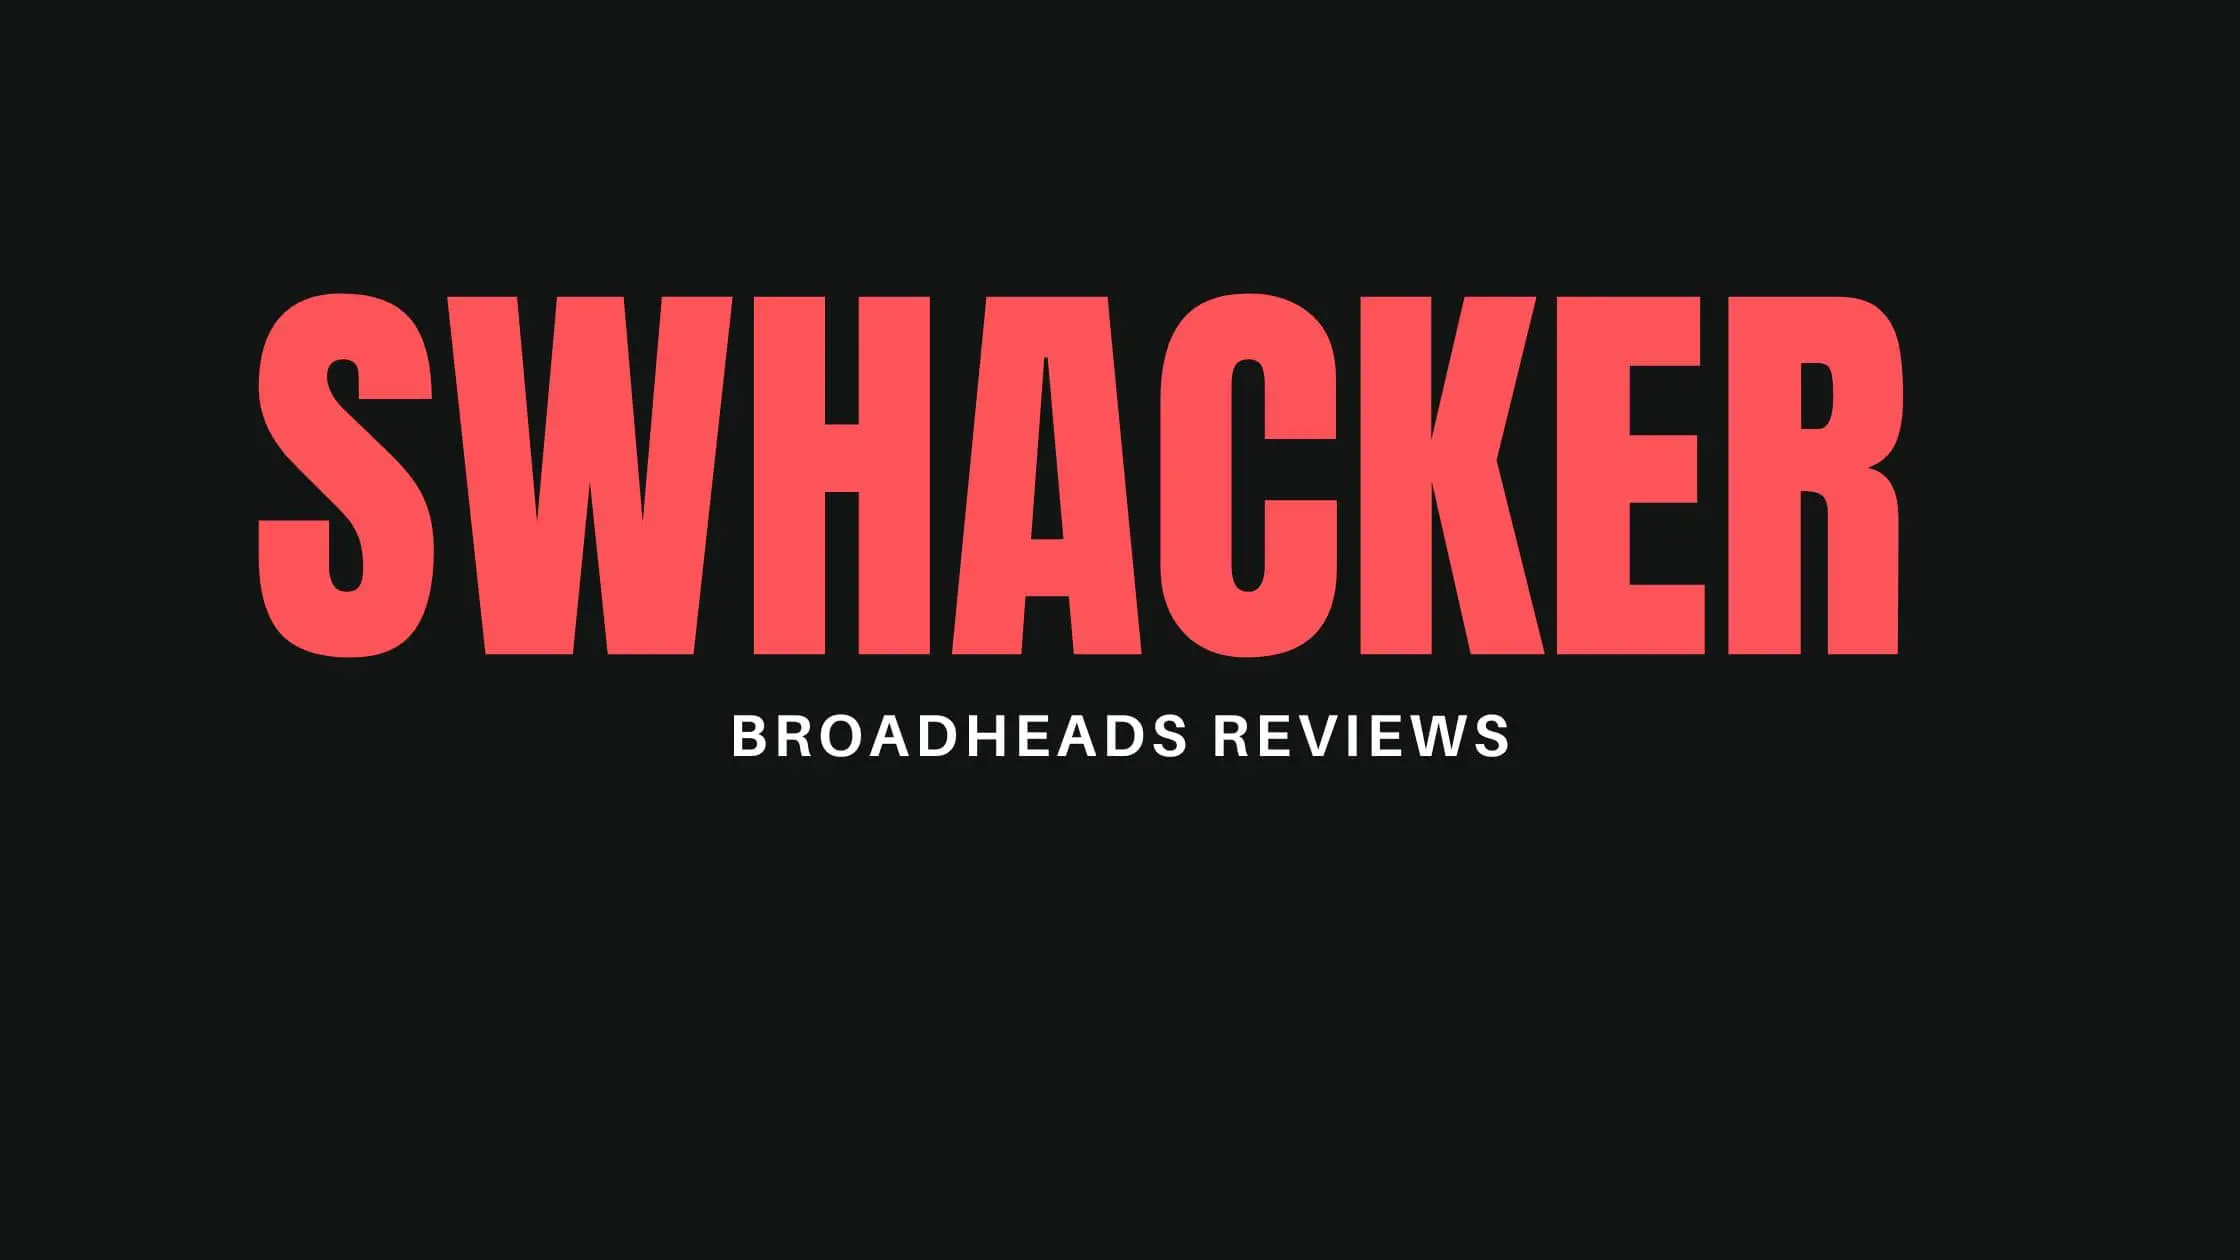 Swhacker Broadheads Reviews